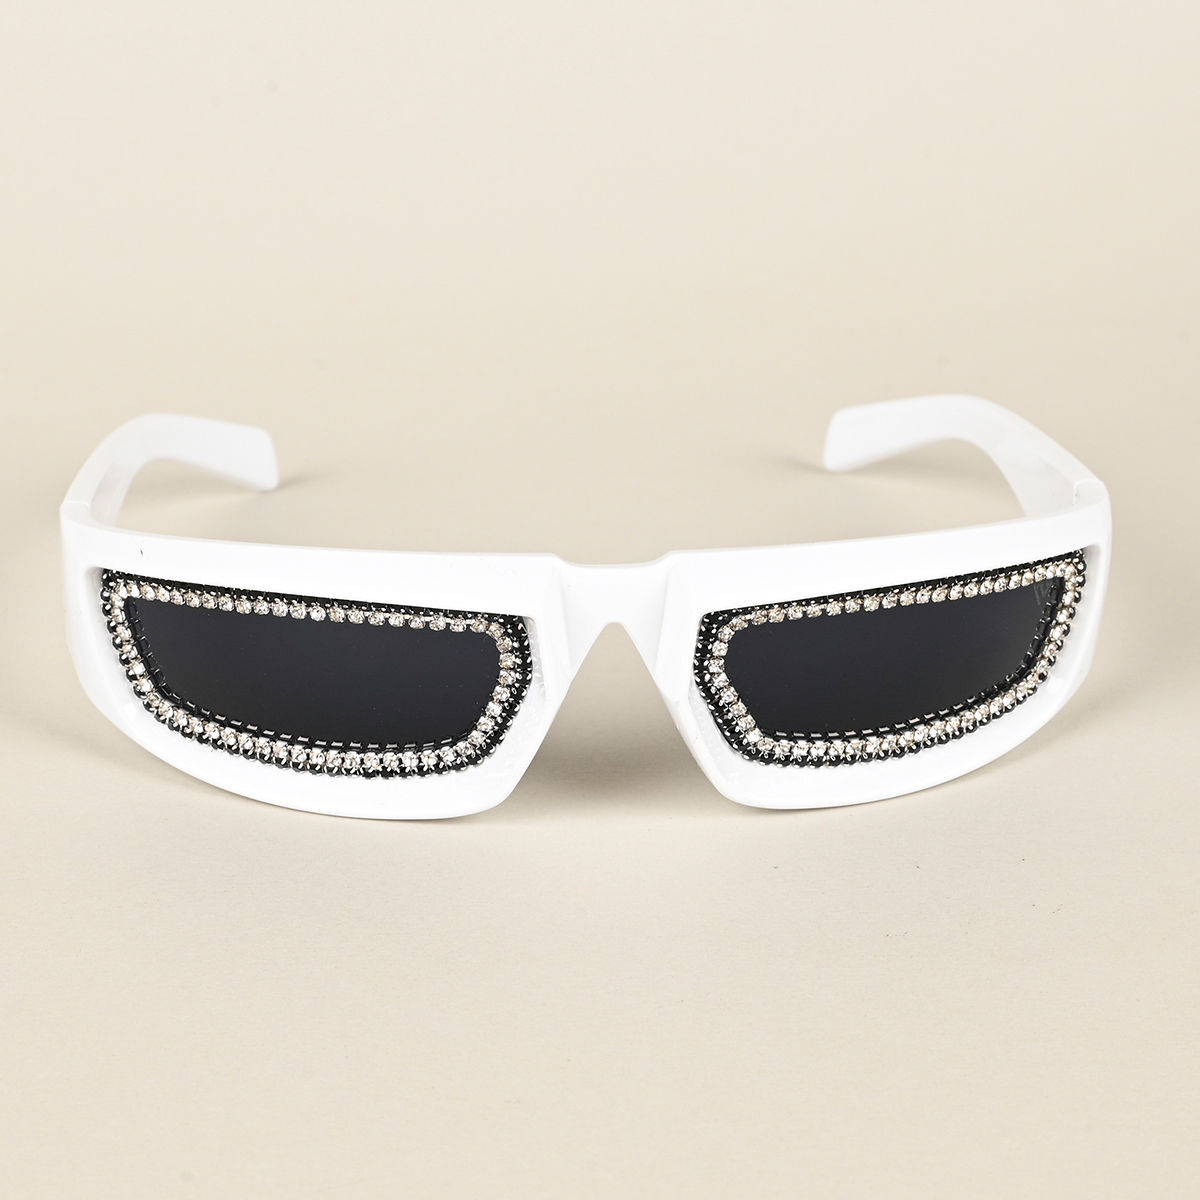 Voyage Silver Wrap-Around Sunglasses for Men & Women - MG4349